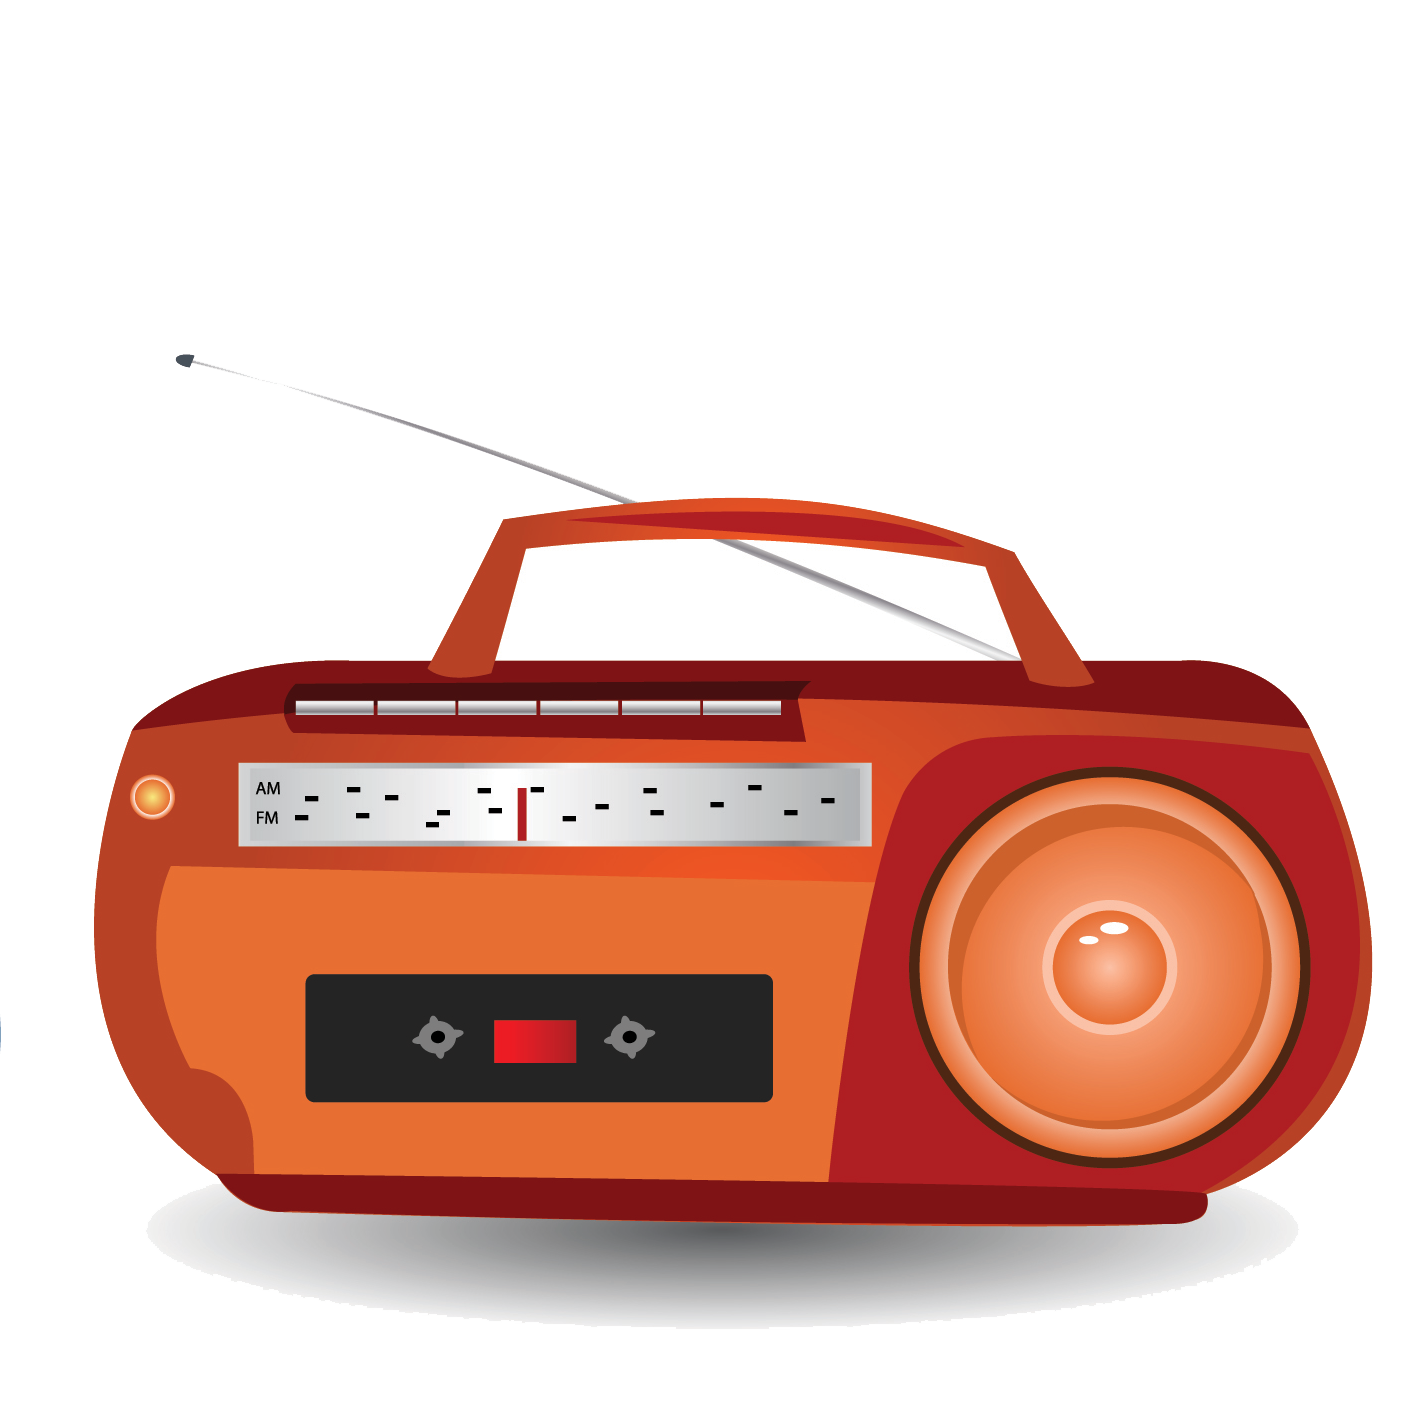 boombox clipart fm radio